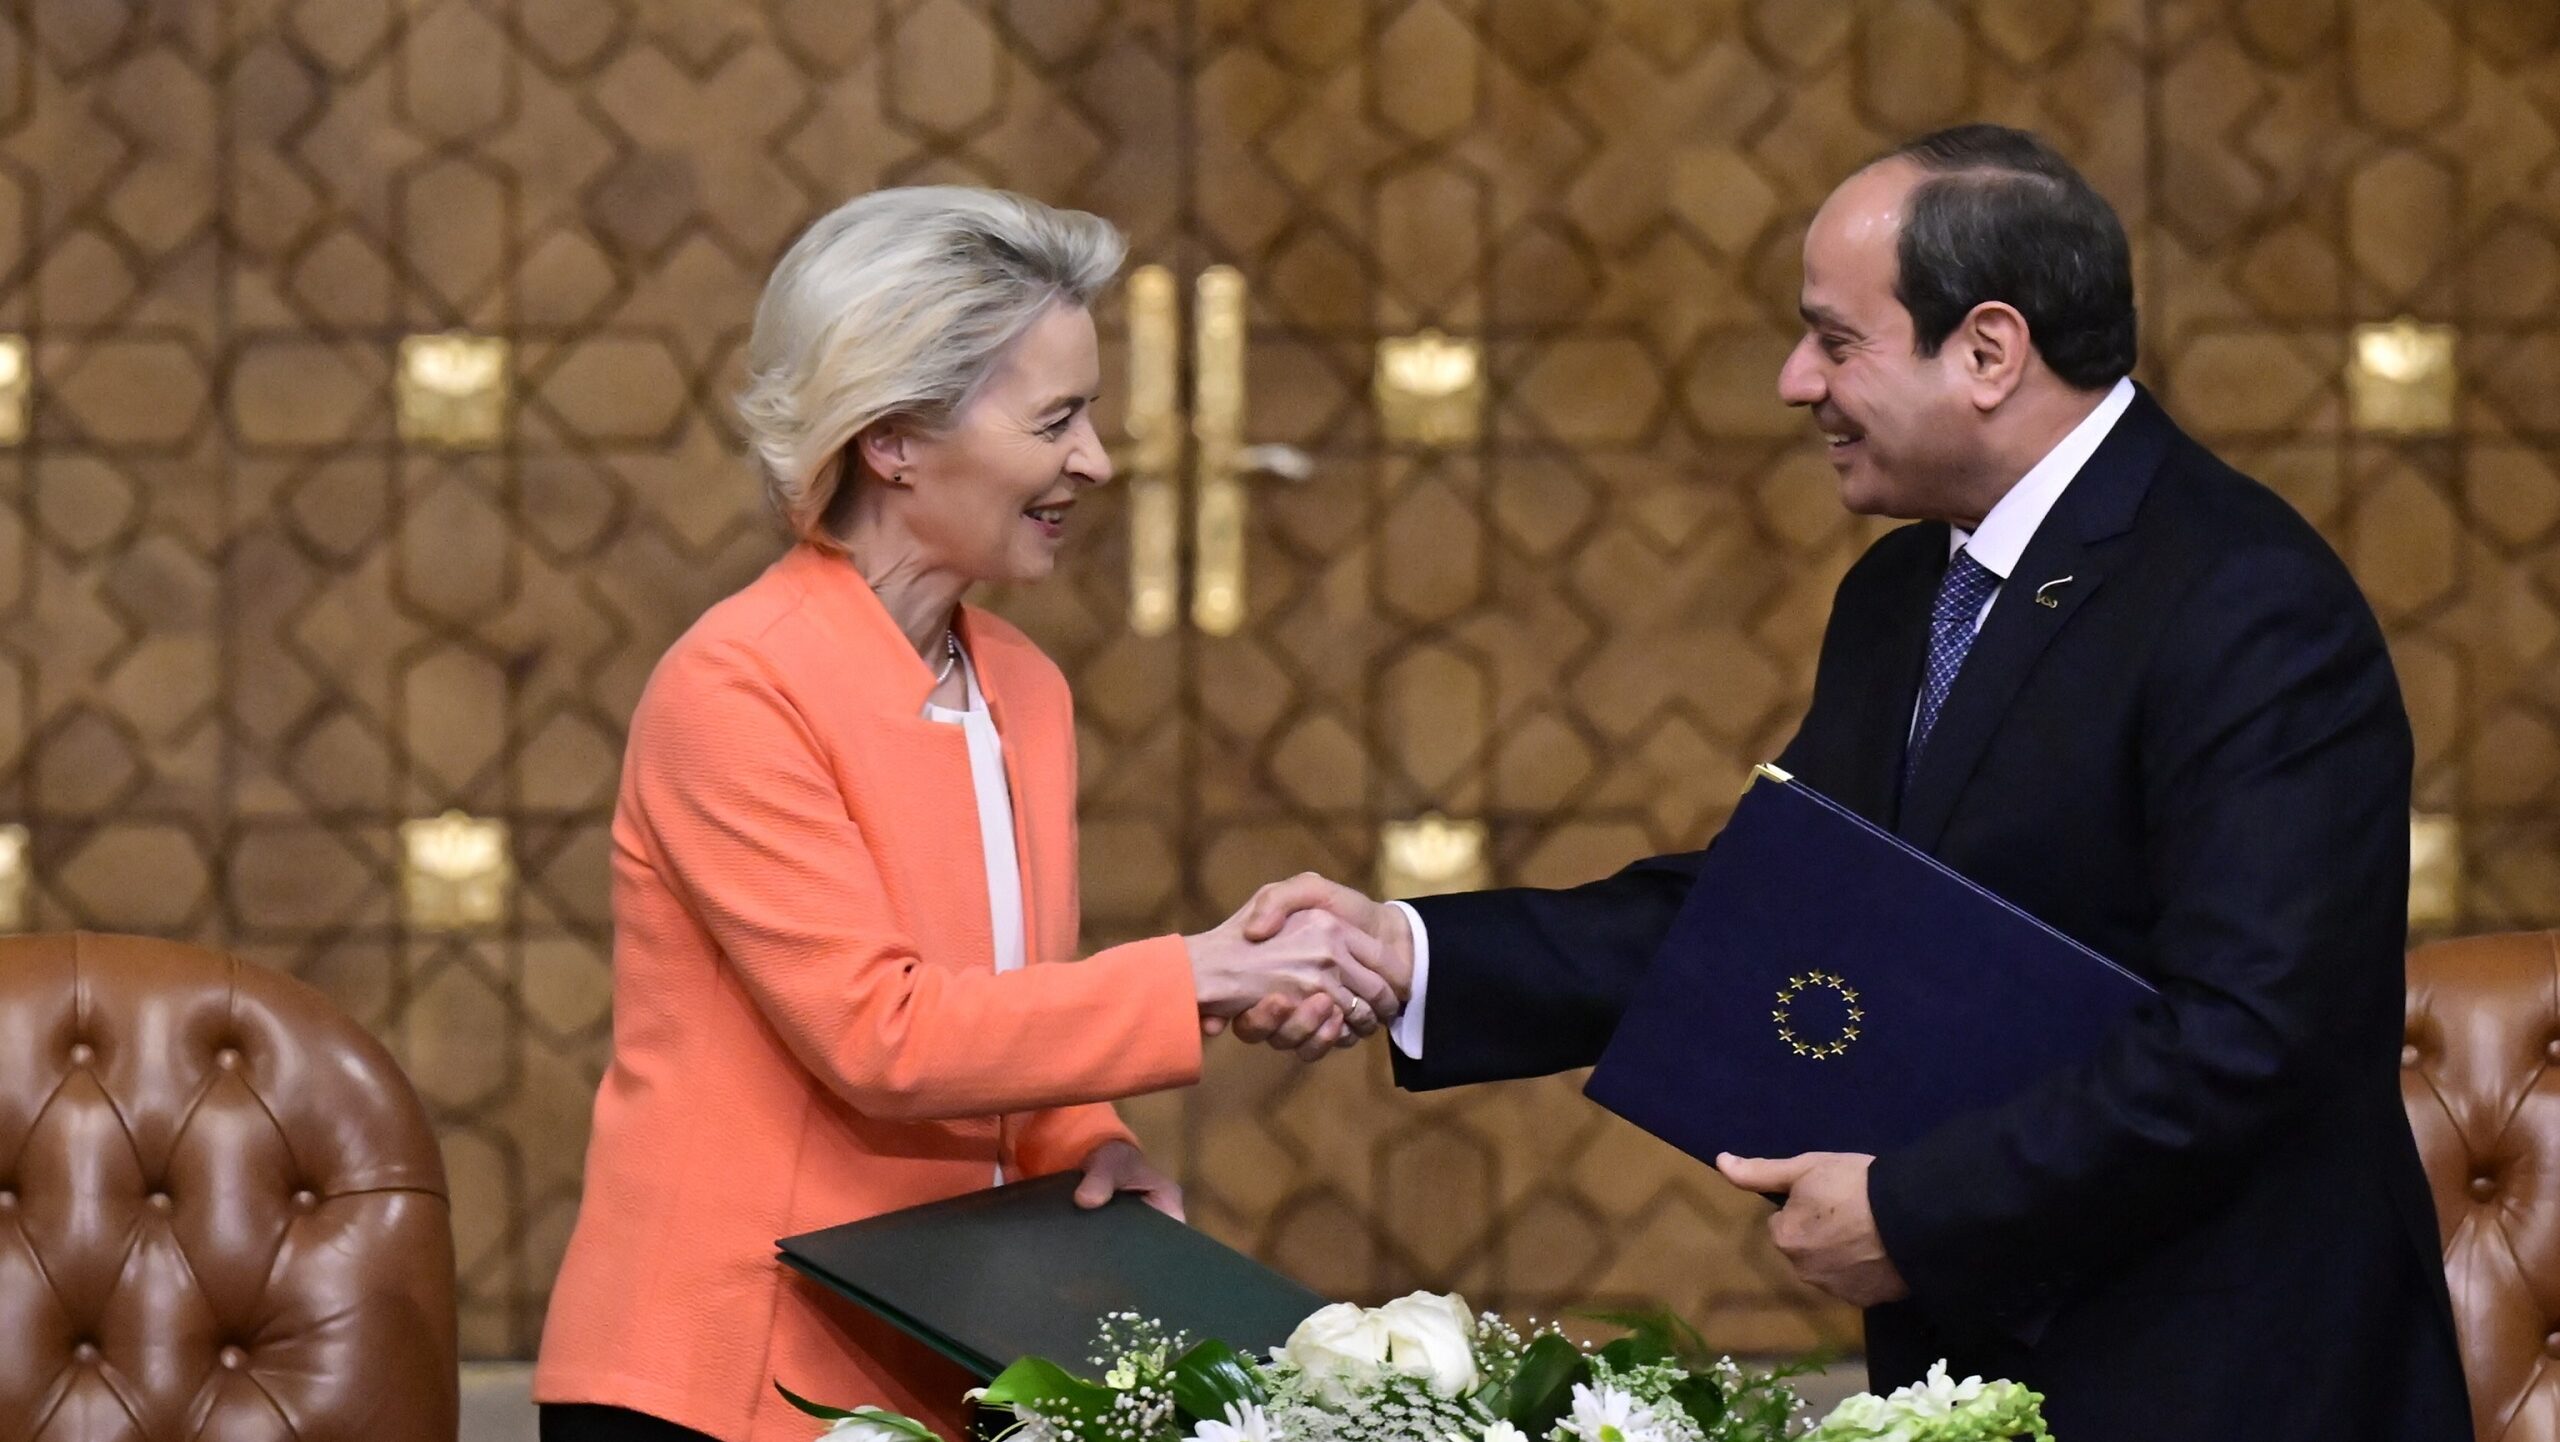 Egypt’s el-Sisi, EC’s von der Leyen Aim To Deepen Egyptian-European Relations